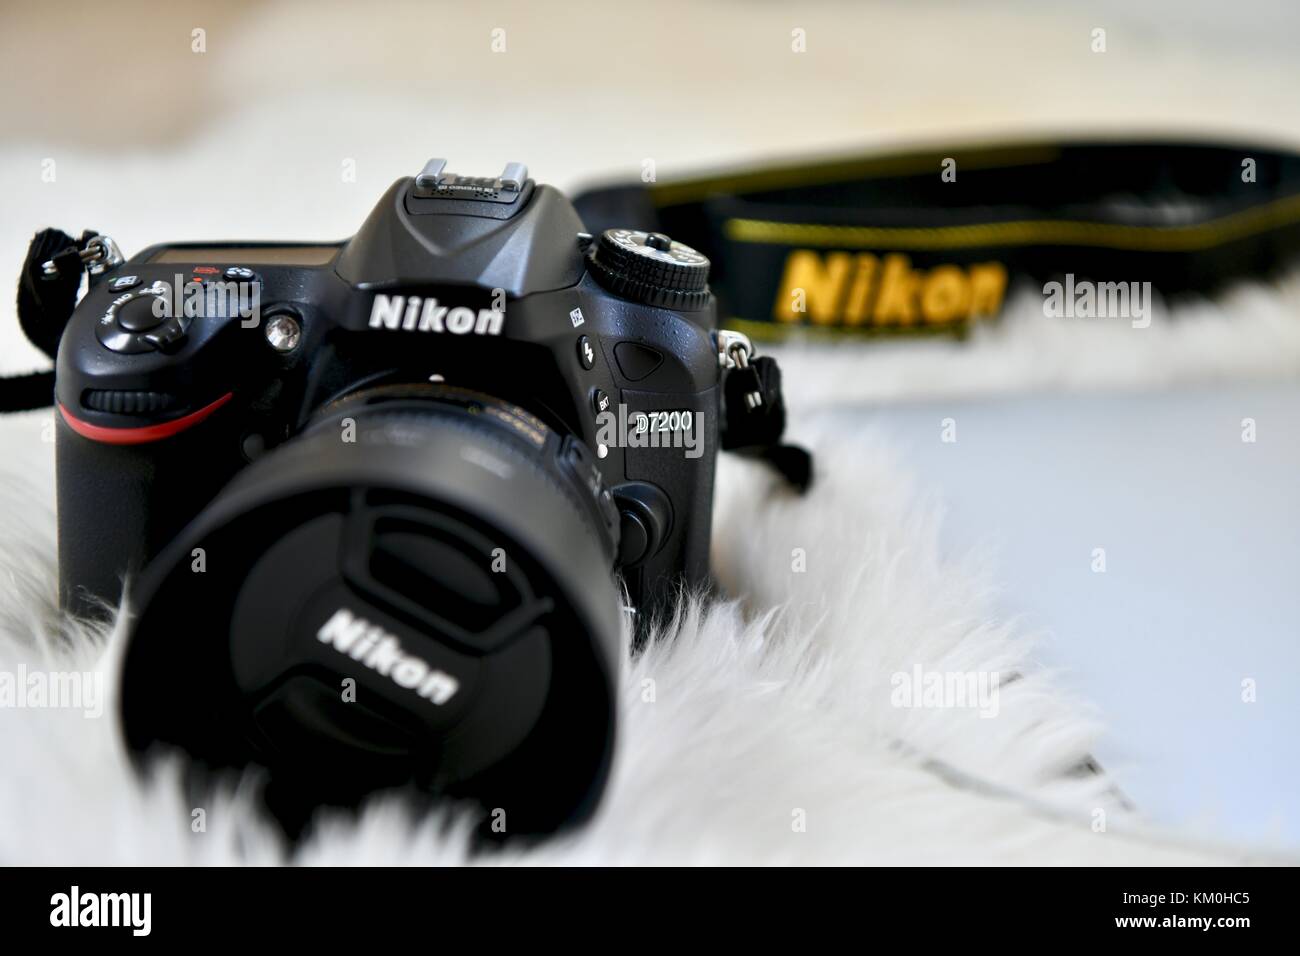 Nikon D7200 dslr camera with 50mm Nikkor lens Stock Photo - Alamy